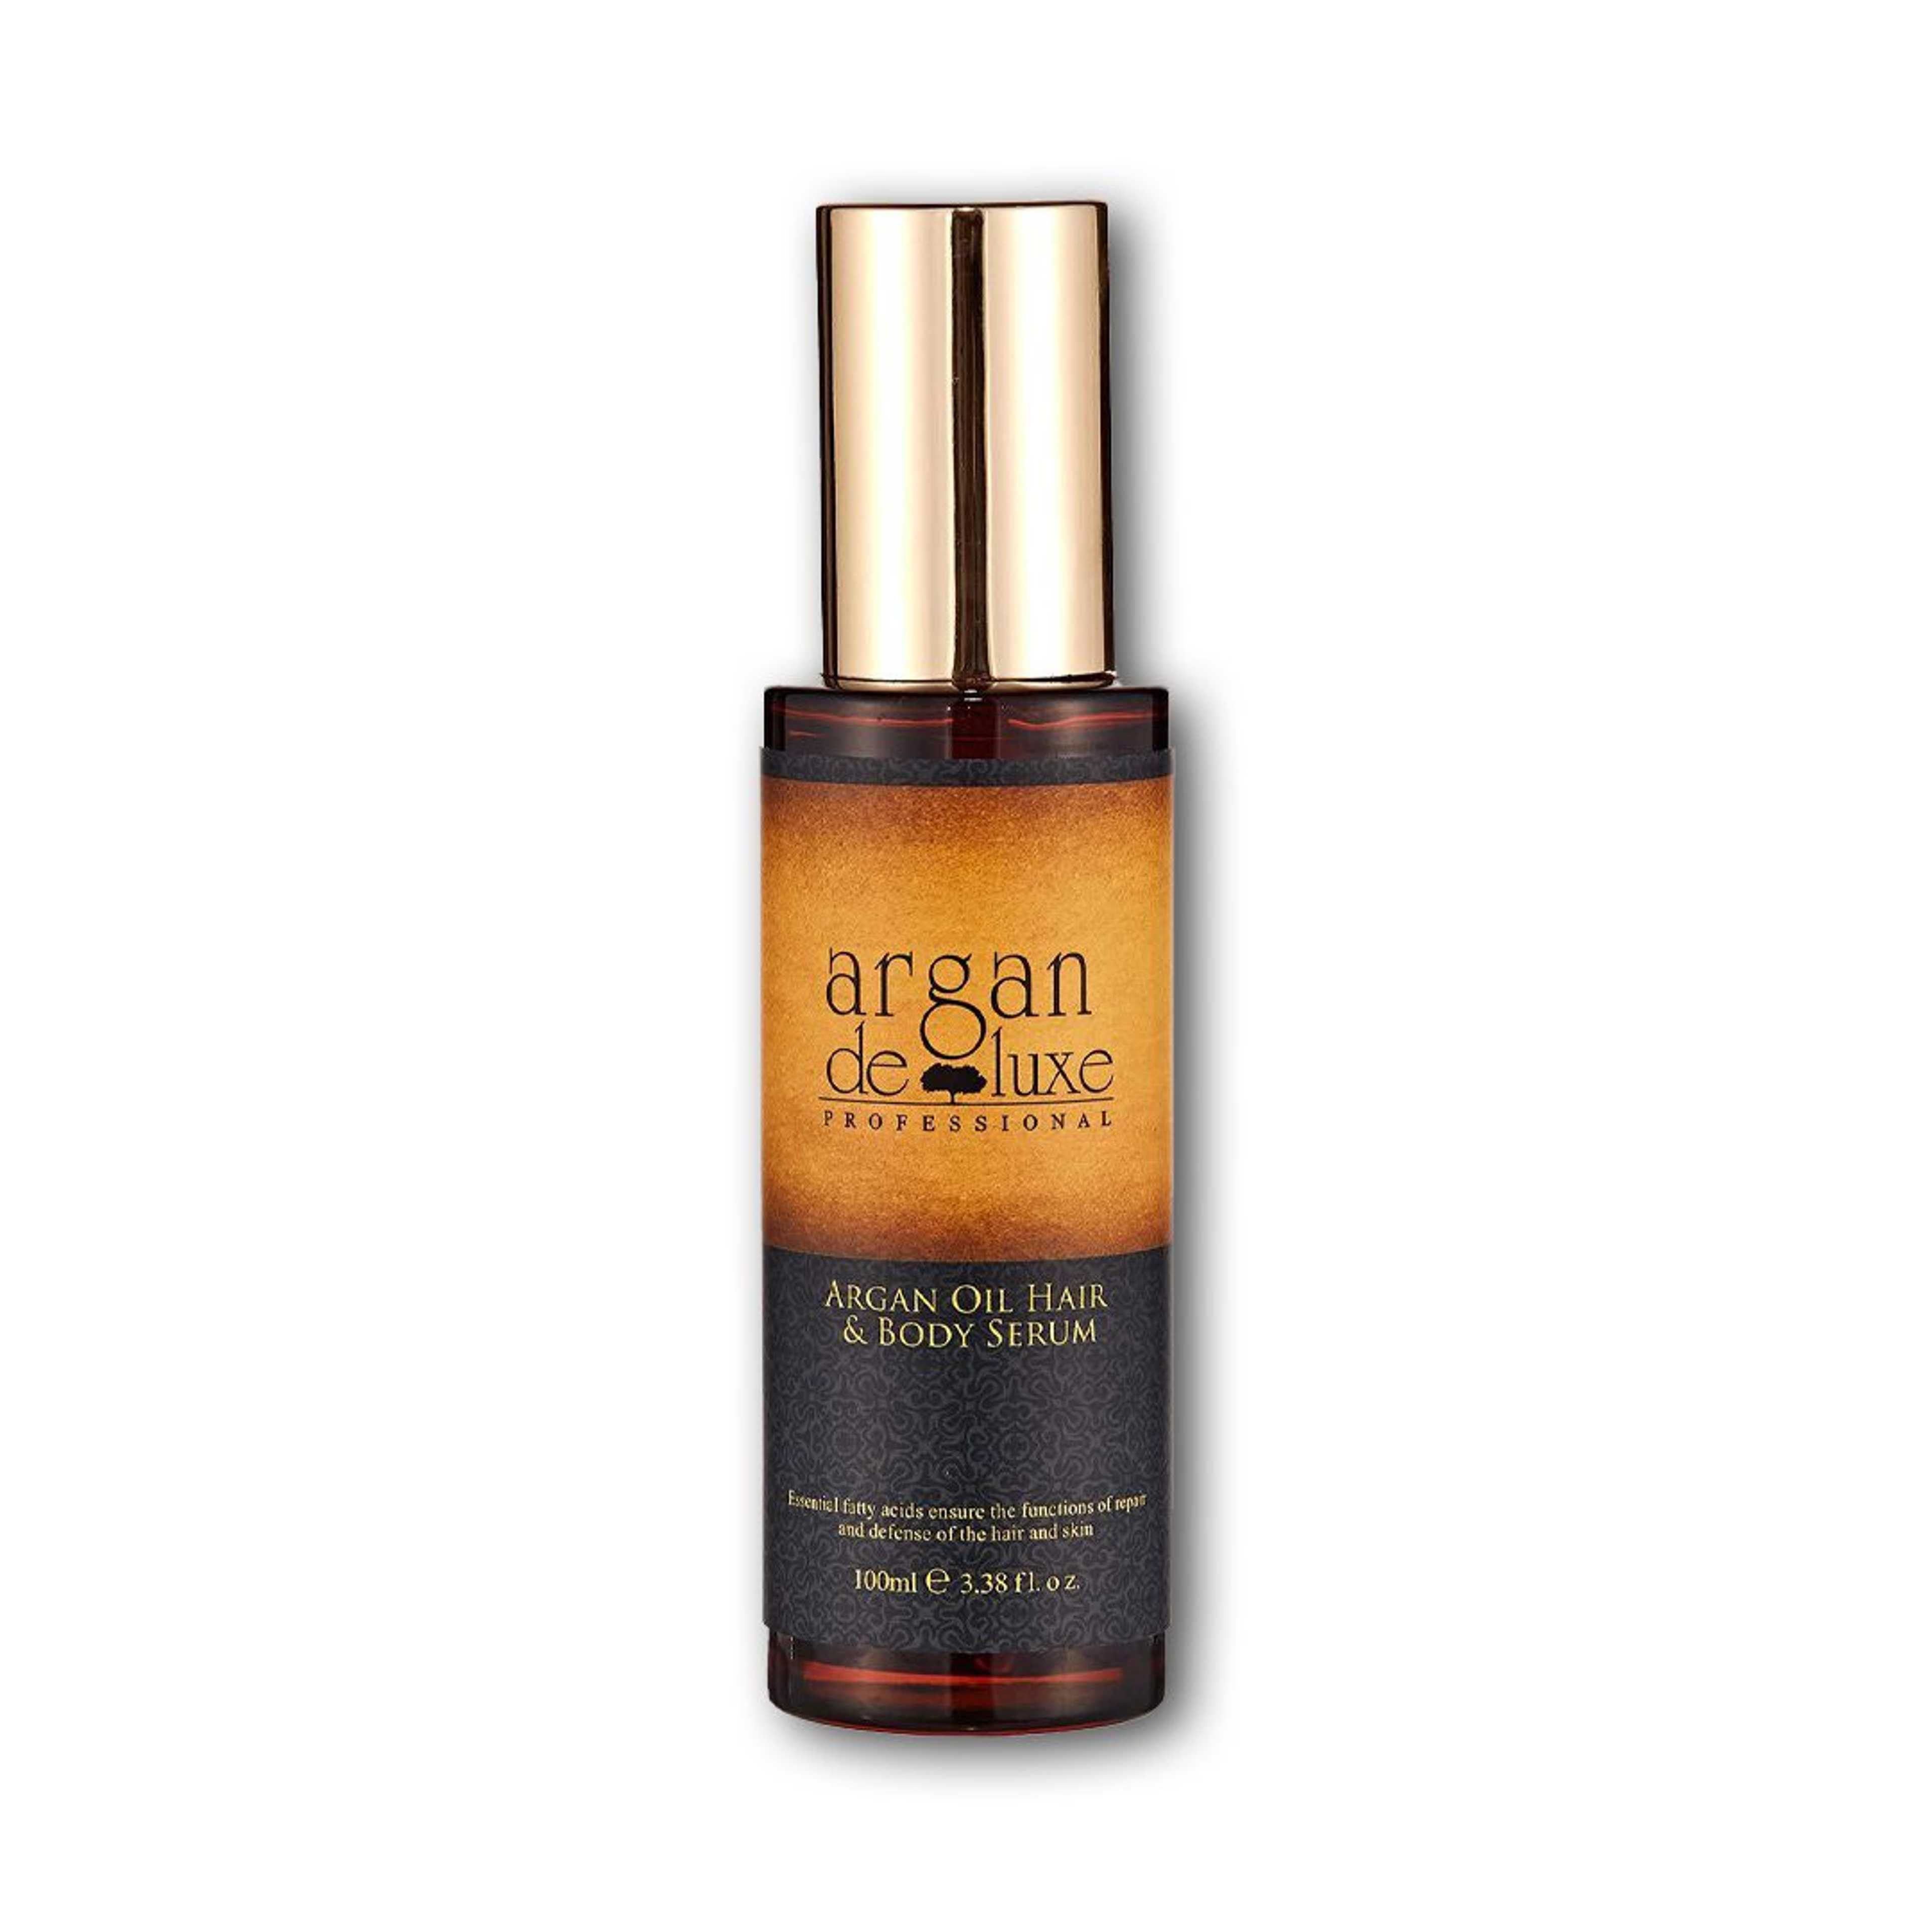 Argan Deluxe Morocco Argan Oil Hair and Body Serum 100ml